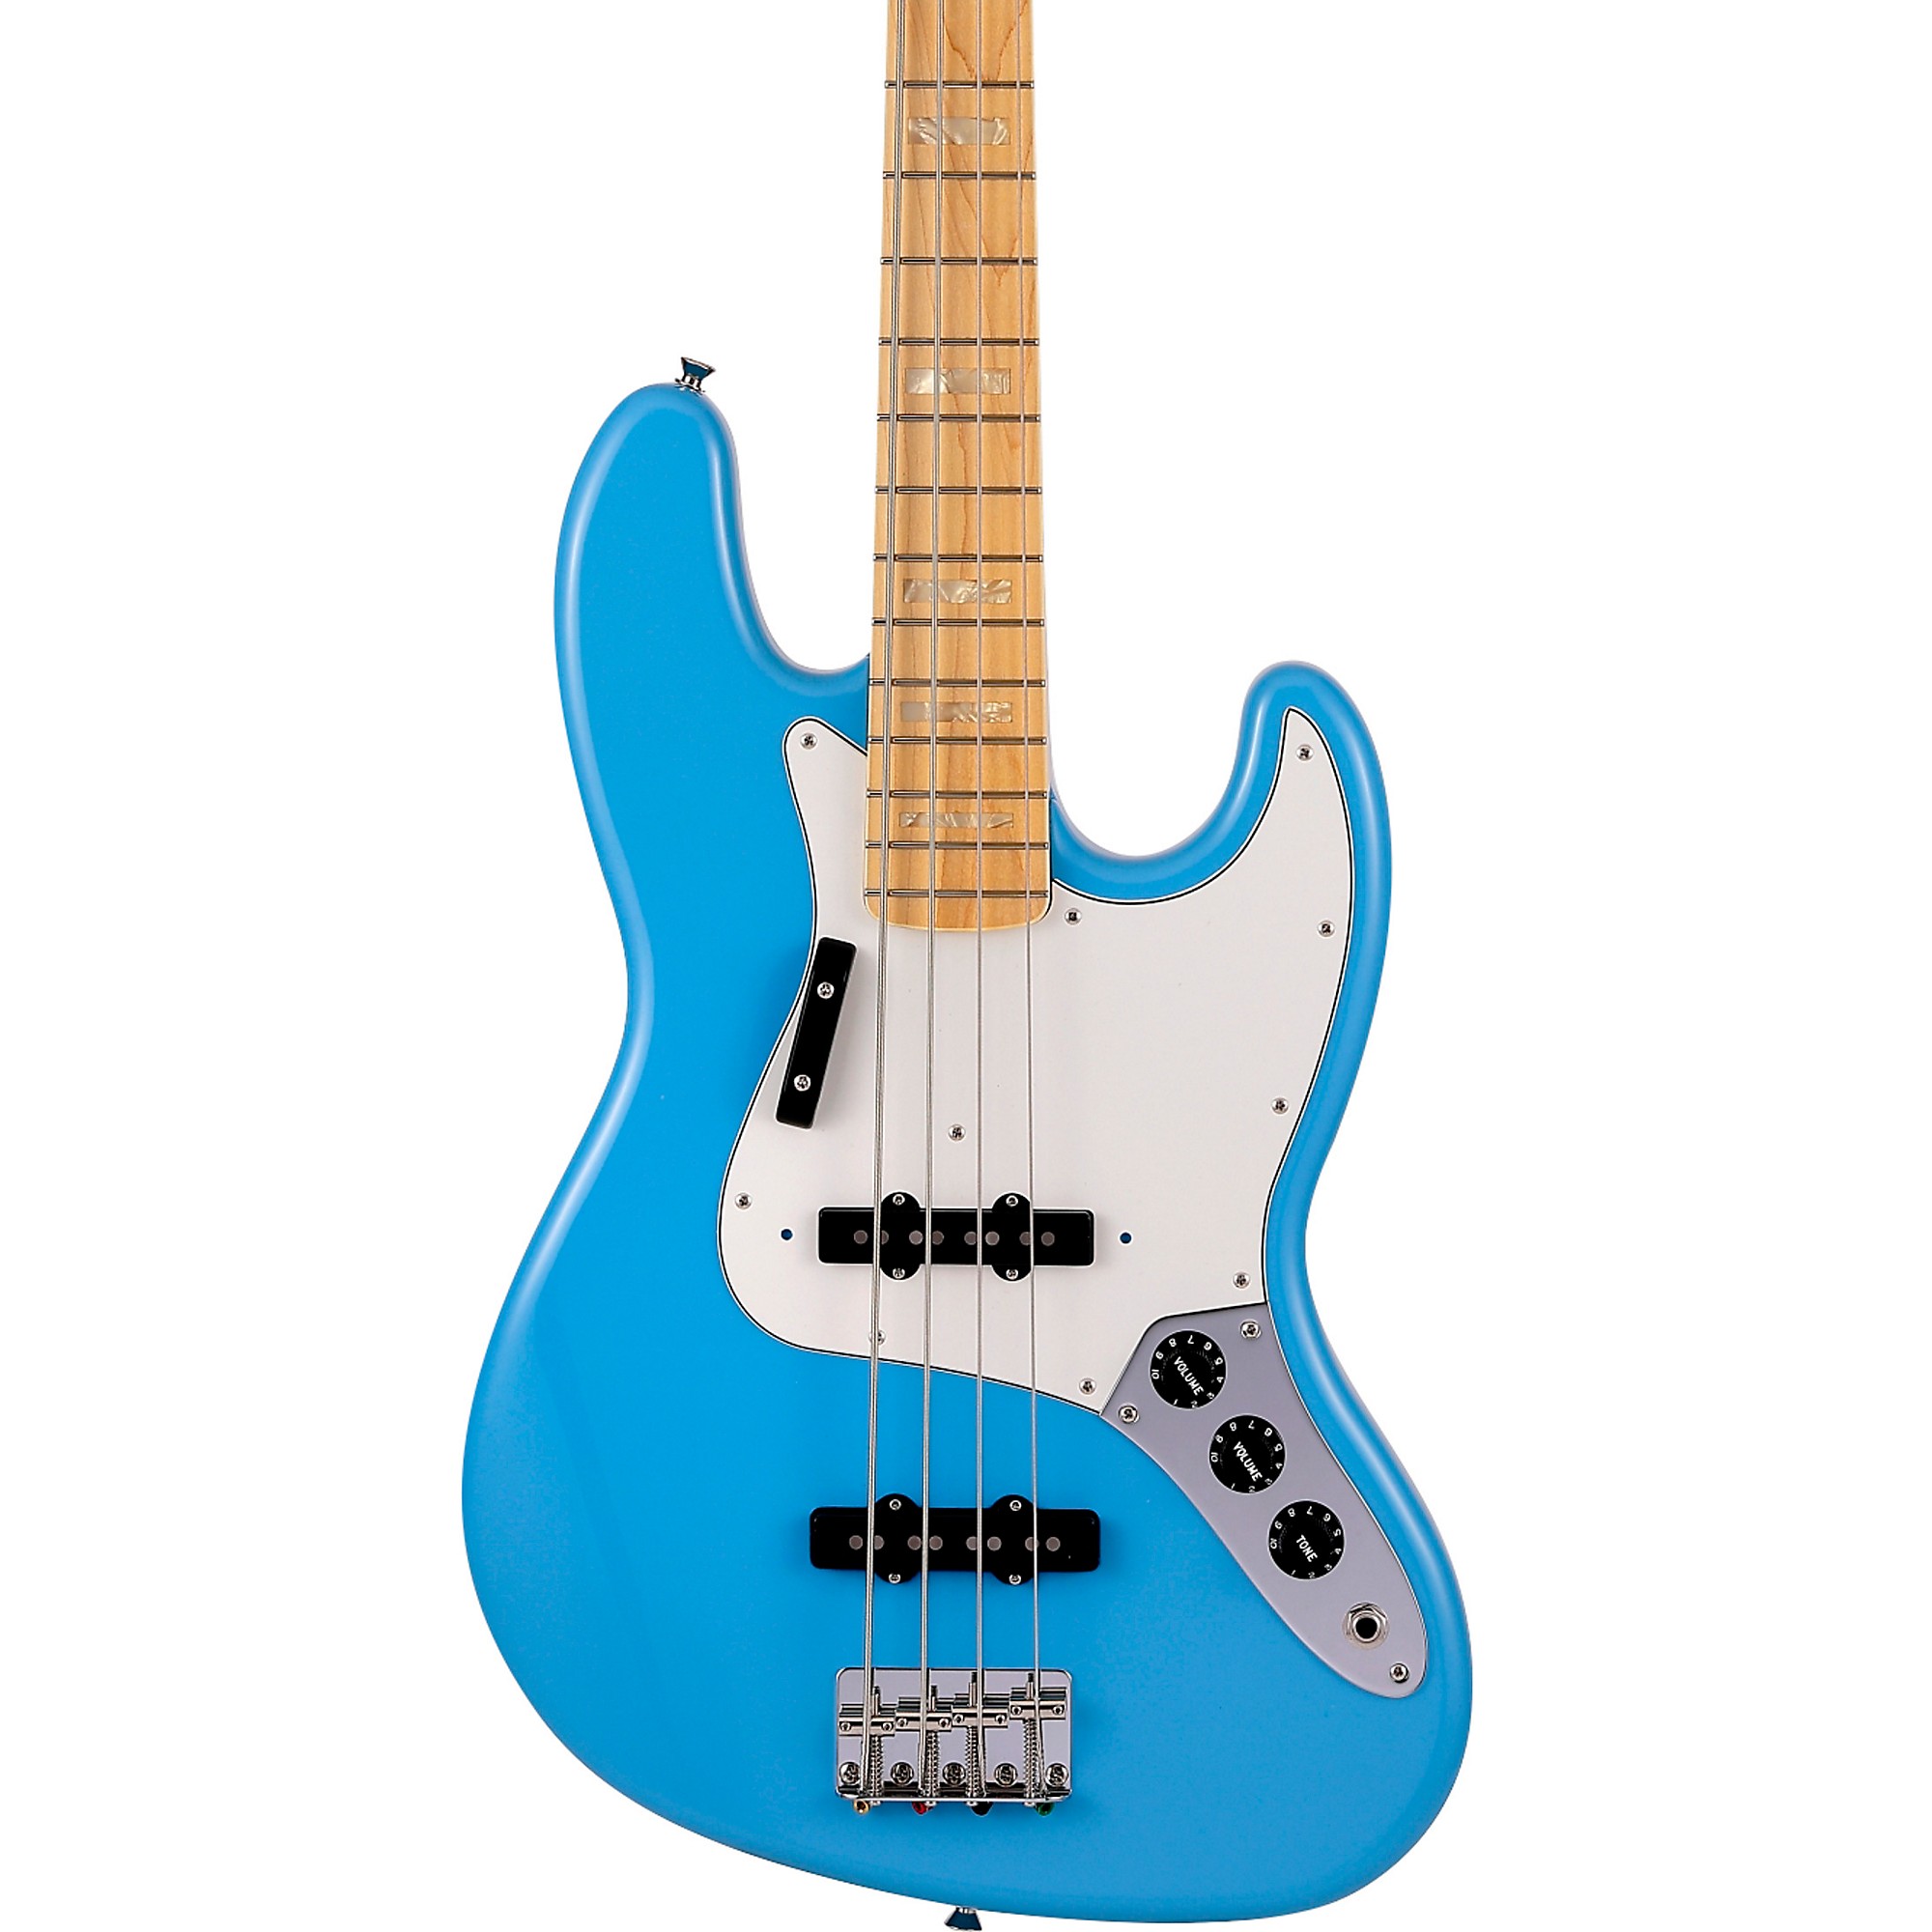 Fender Made in Japan Limited International Color Jazz Bass Maui